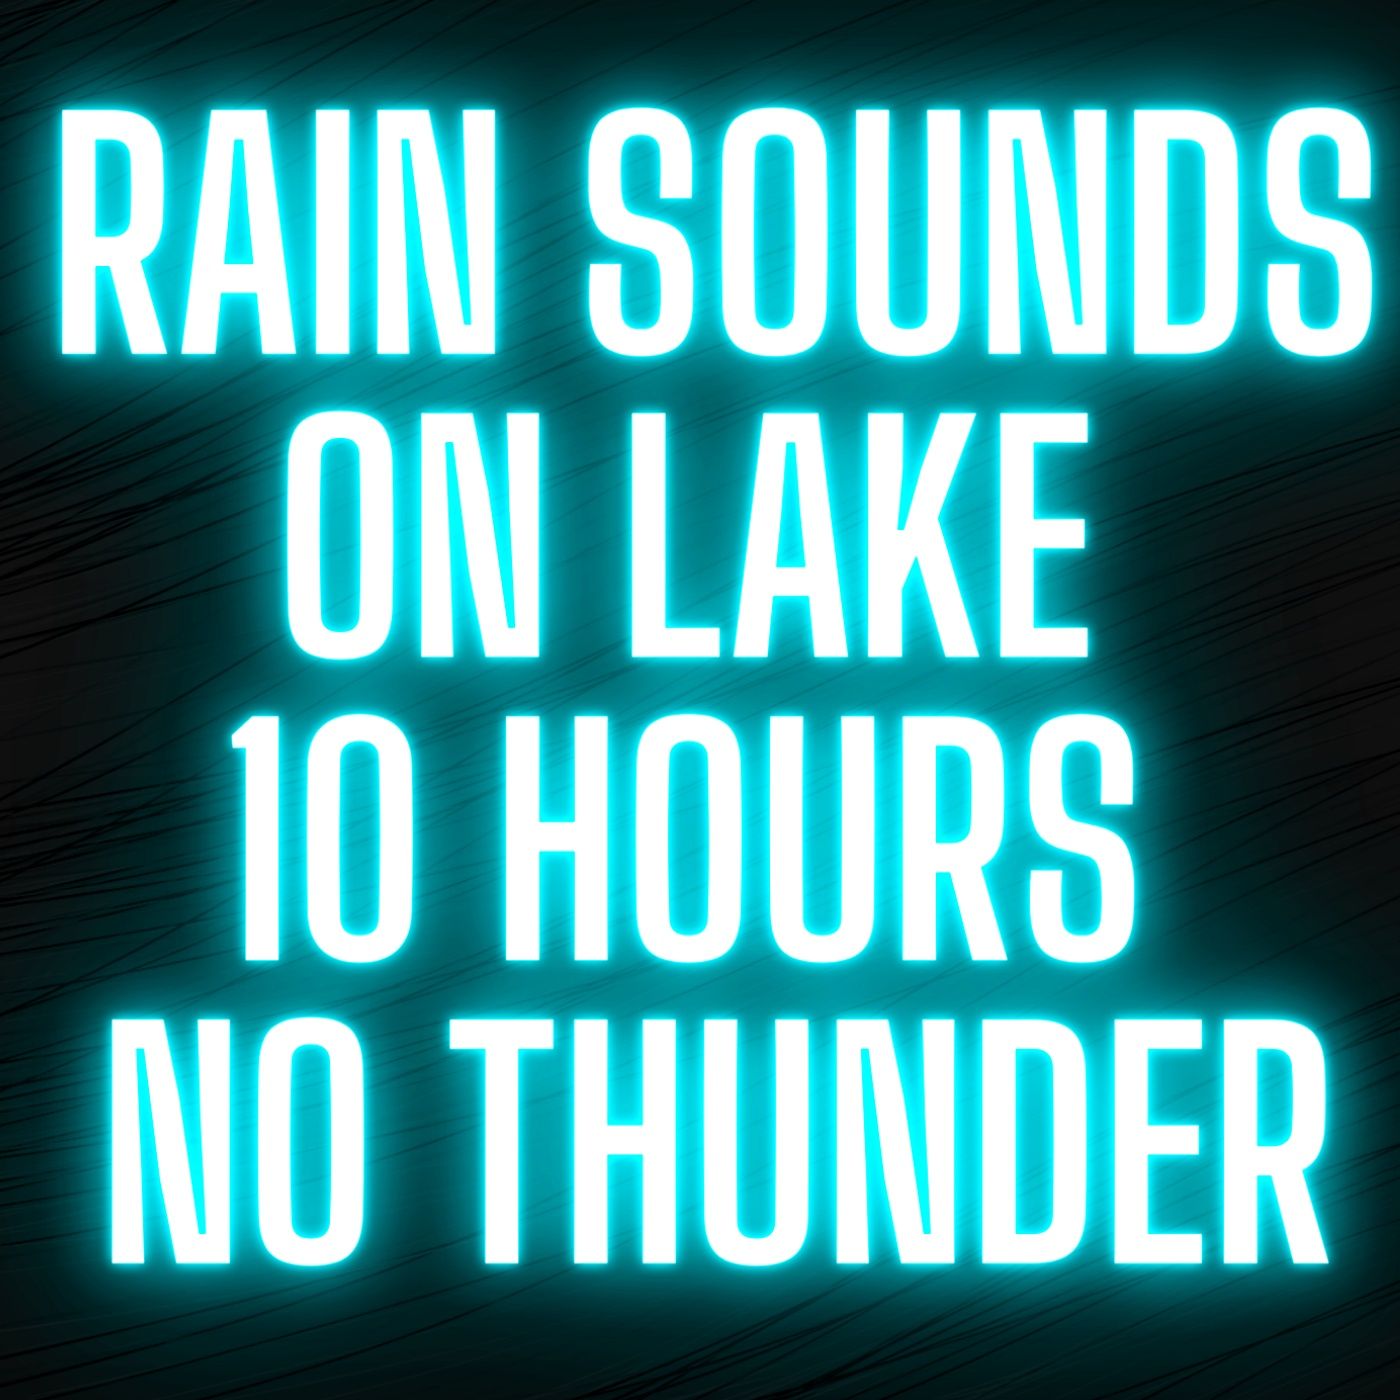 Rain Sounds on Lake 10 HOURS NO THUNDER